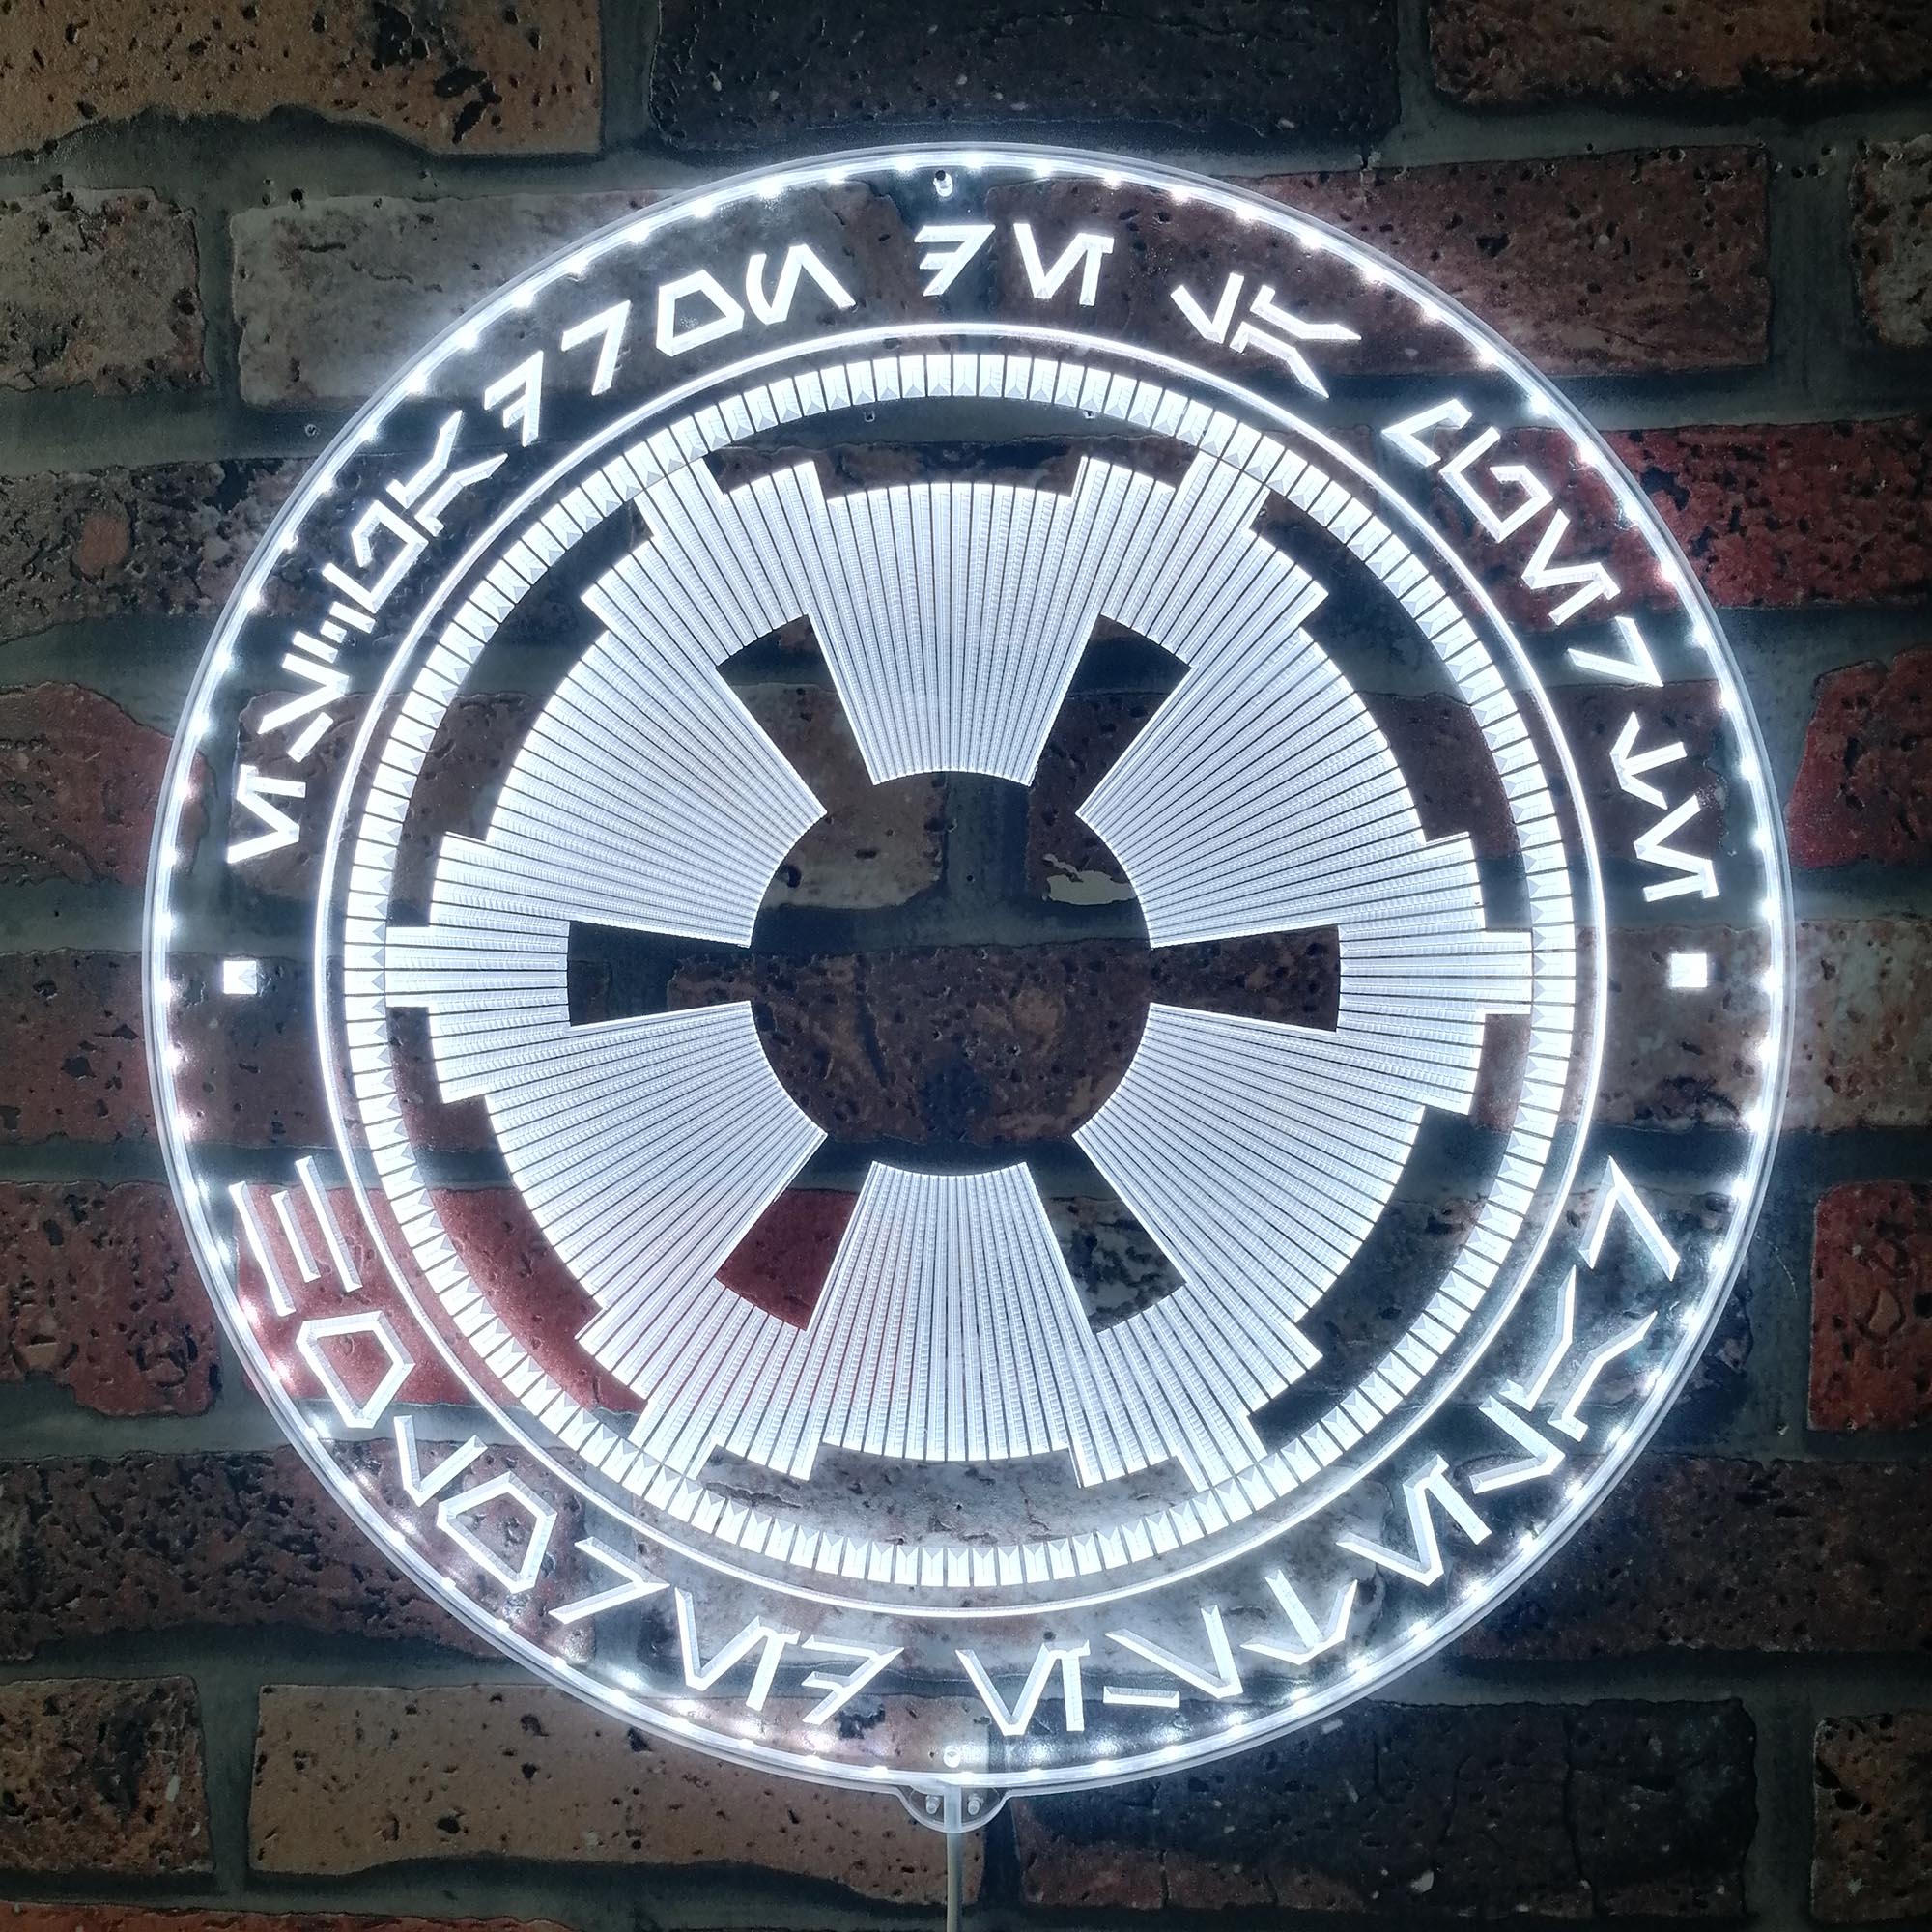 Star Wars Galactic Empire Dynamic RGB Edge Lit LED Sign